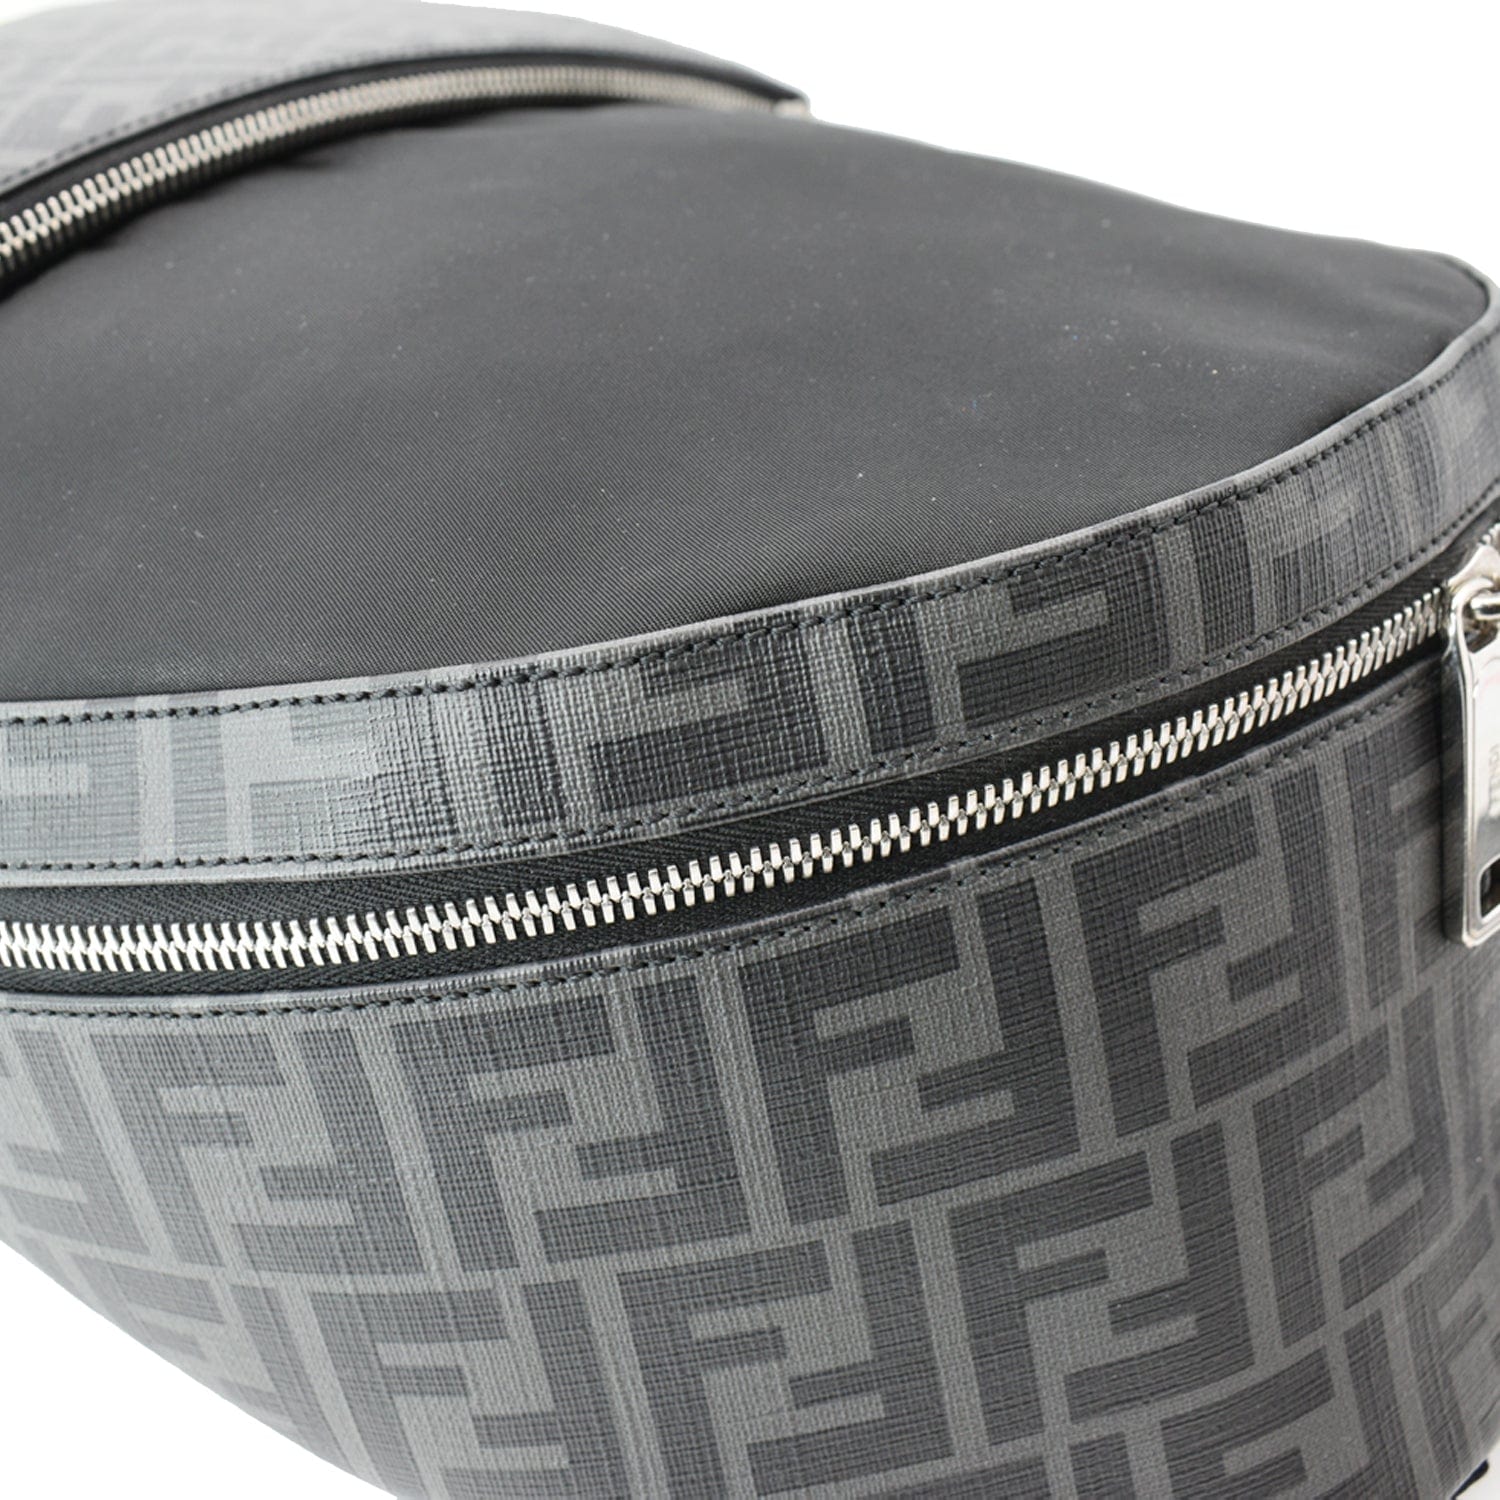 Fendi Diagonal Belt Bag Fabric Black